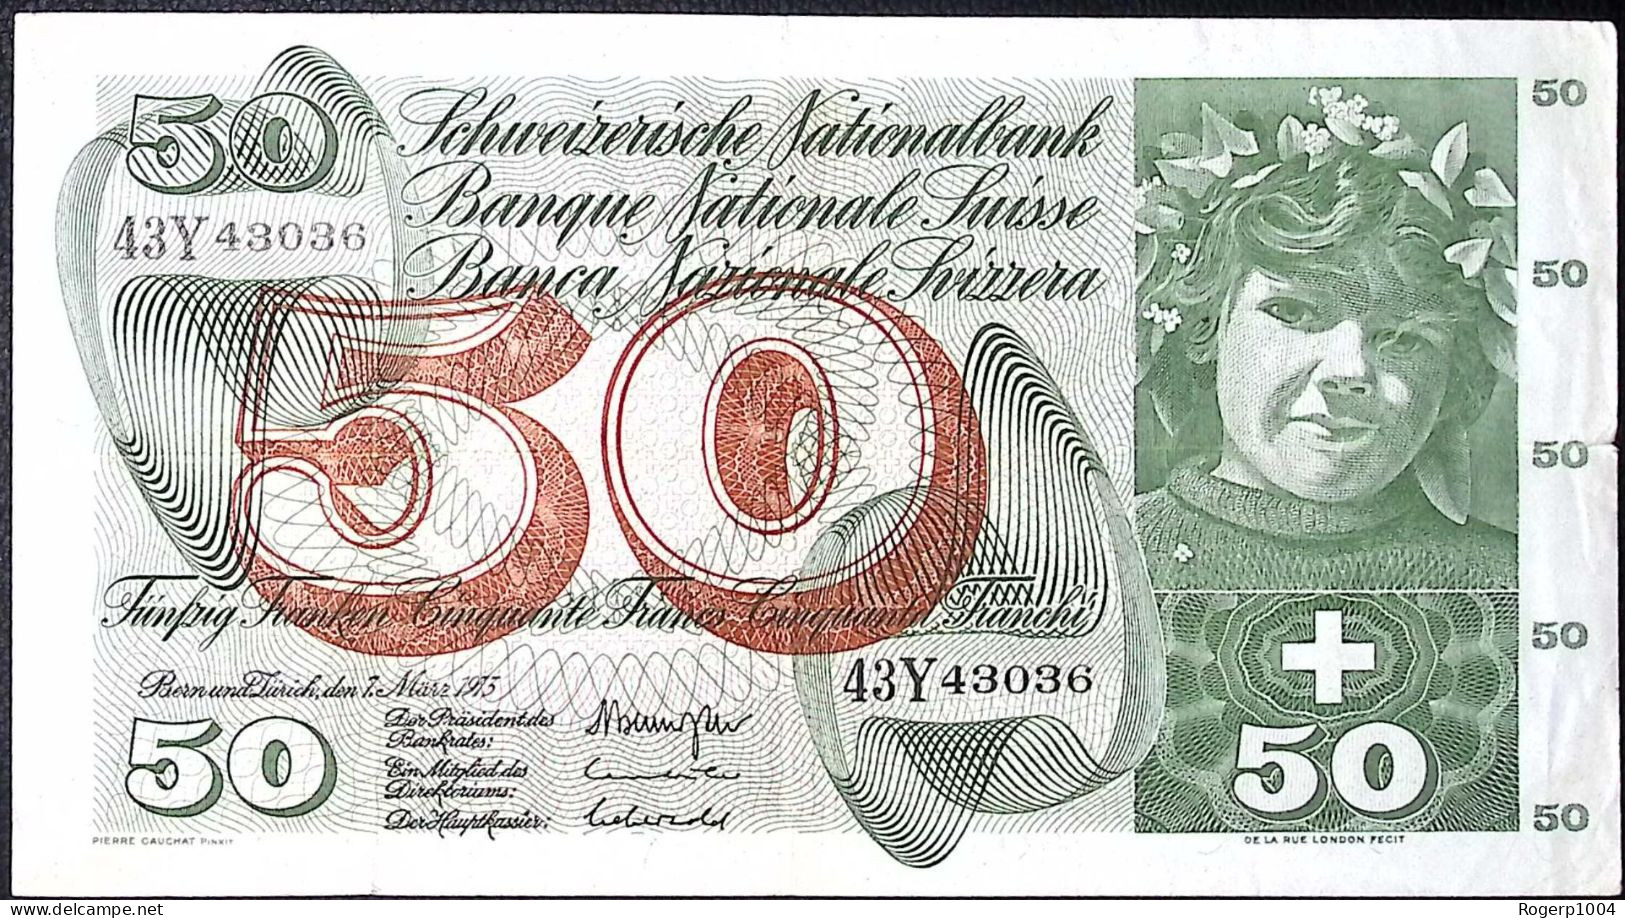 SUISSE/SWITZERLAND * 50 Francs * Cueillette Des Pommes * 07/03/73 * Etat/Grade TTB/VF - Switzerland